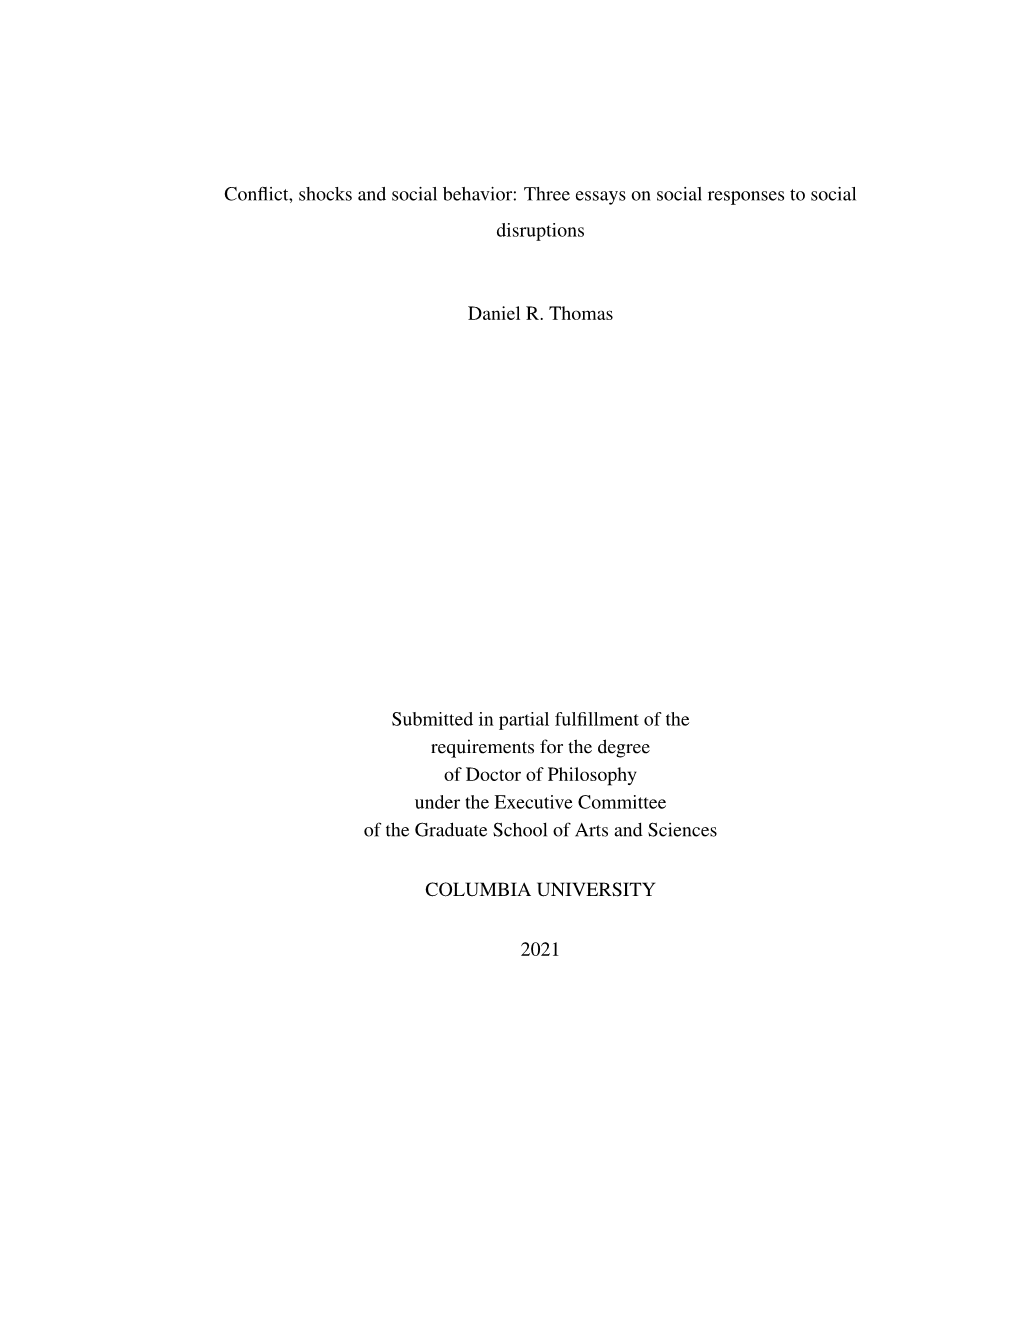 Conflict, Shocks and Social Behavior: Three Essays on Social Responses